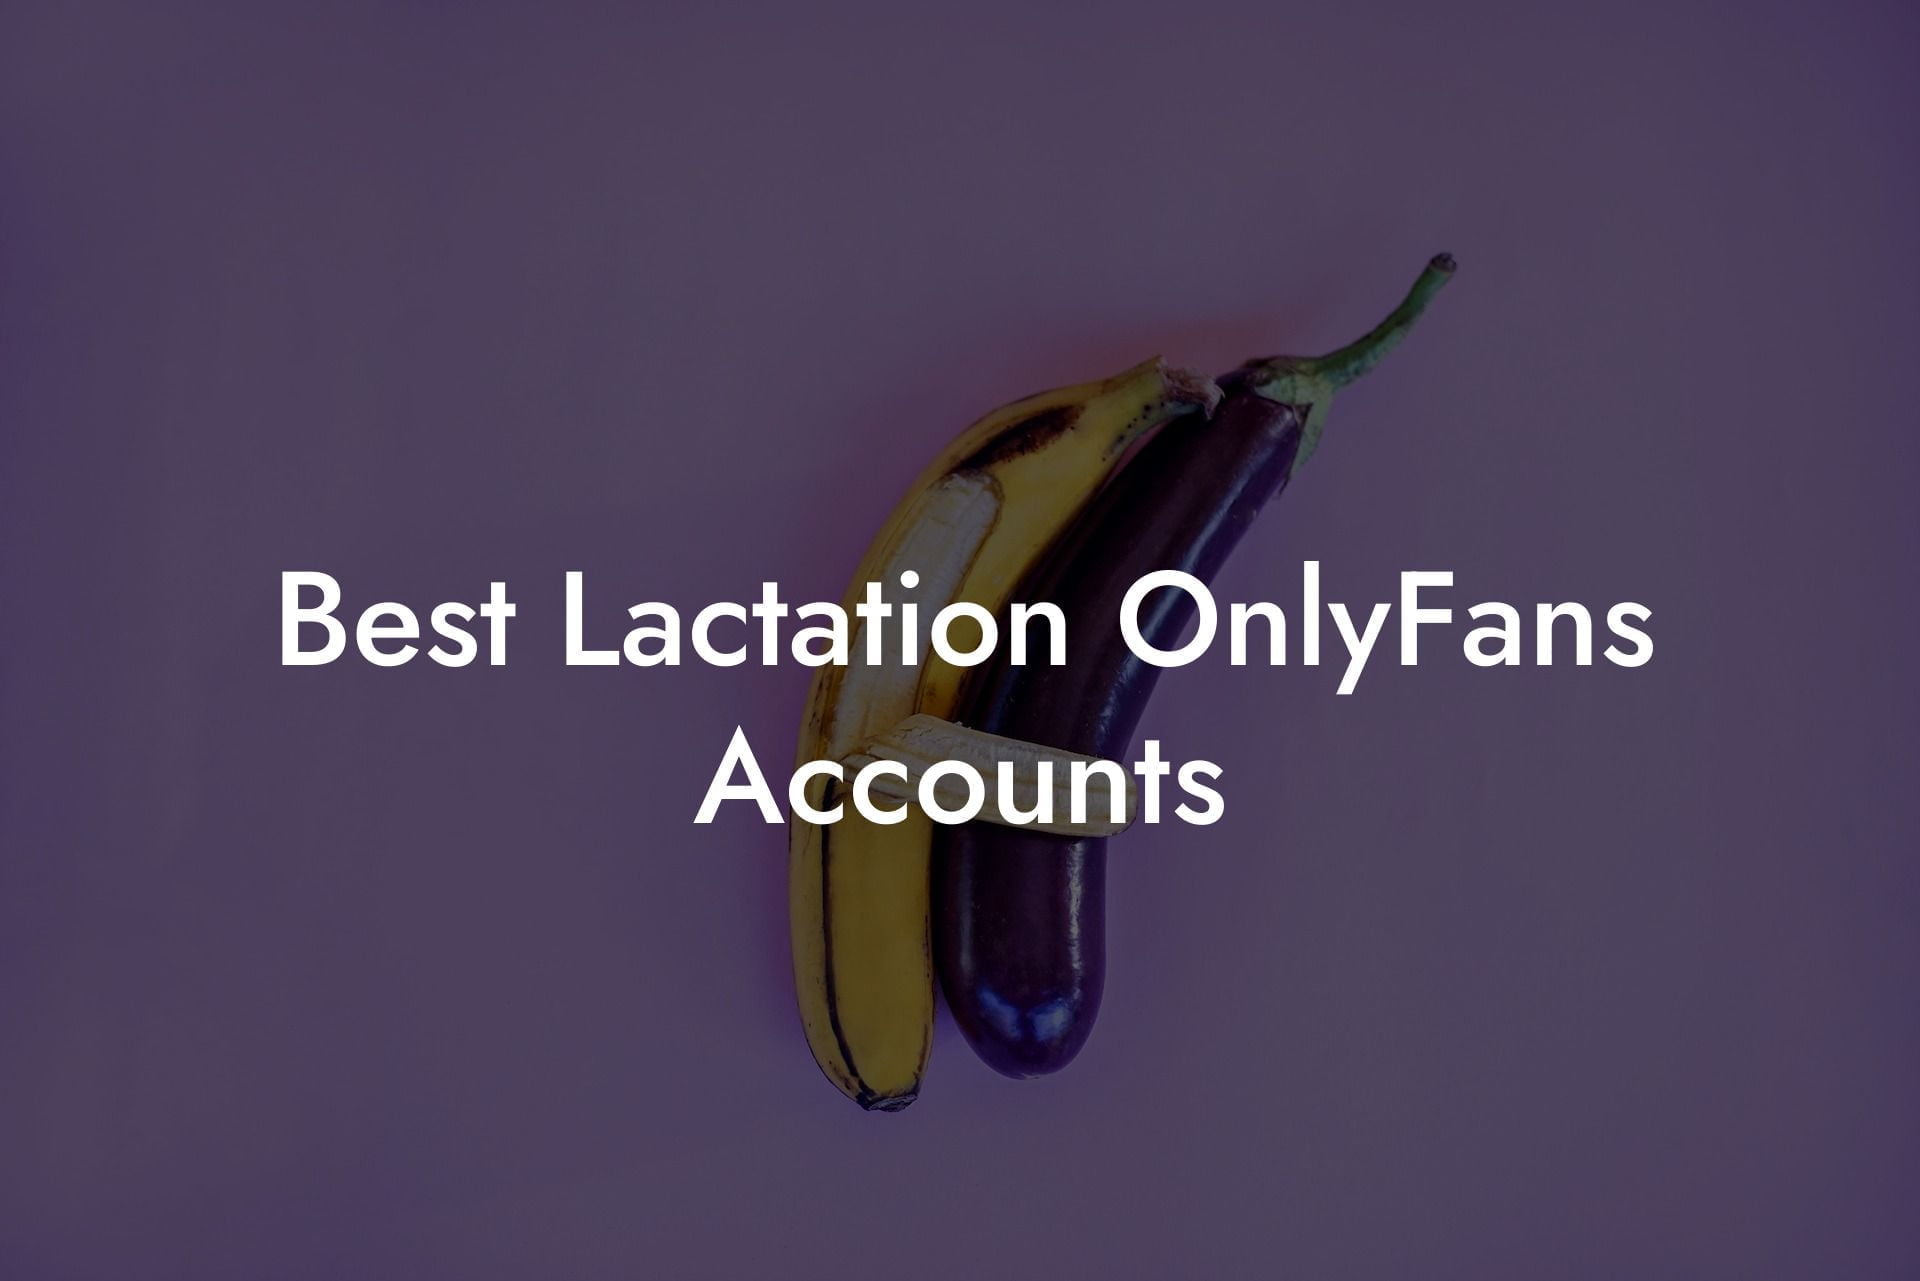 Best Lactation OnlyFans Accounts